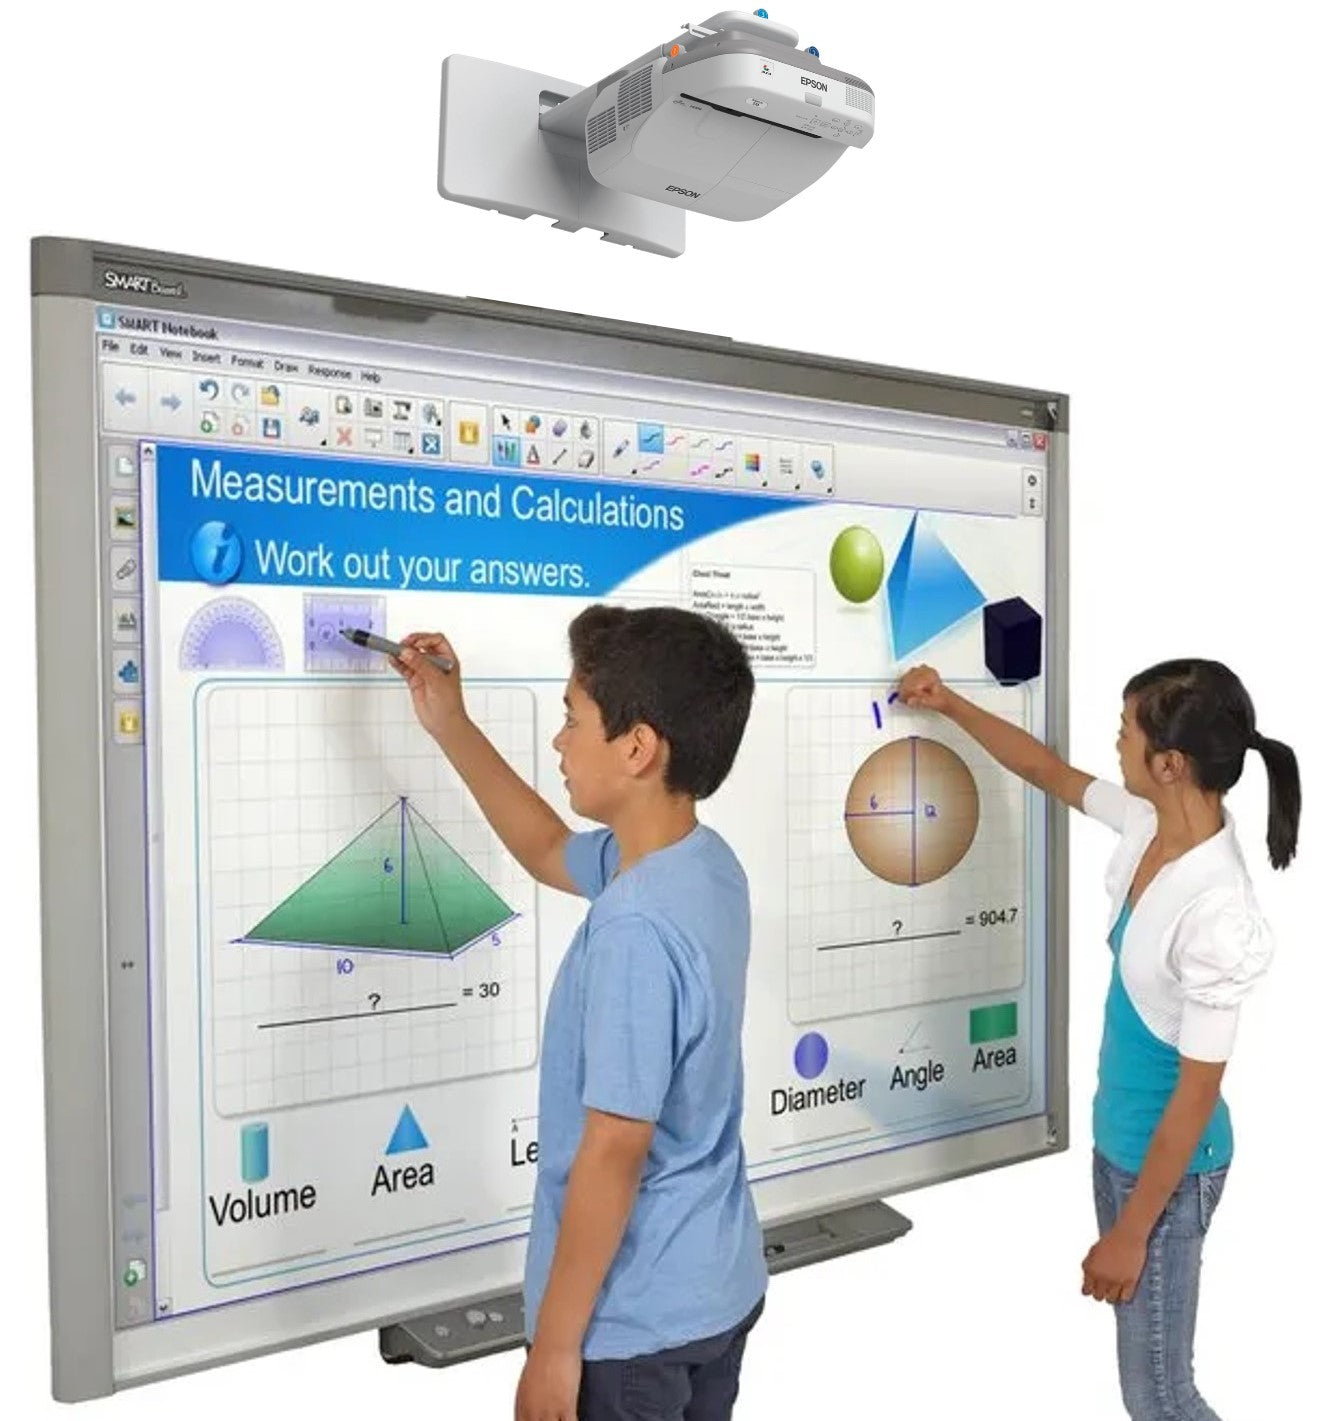 Classroom Smart Board_Interactive Whiteboard System 